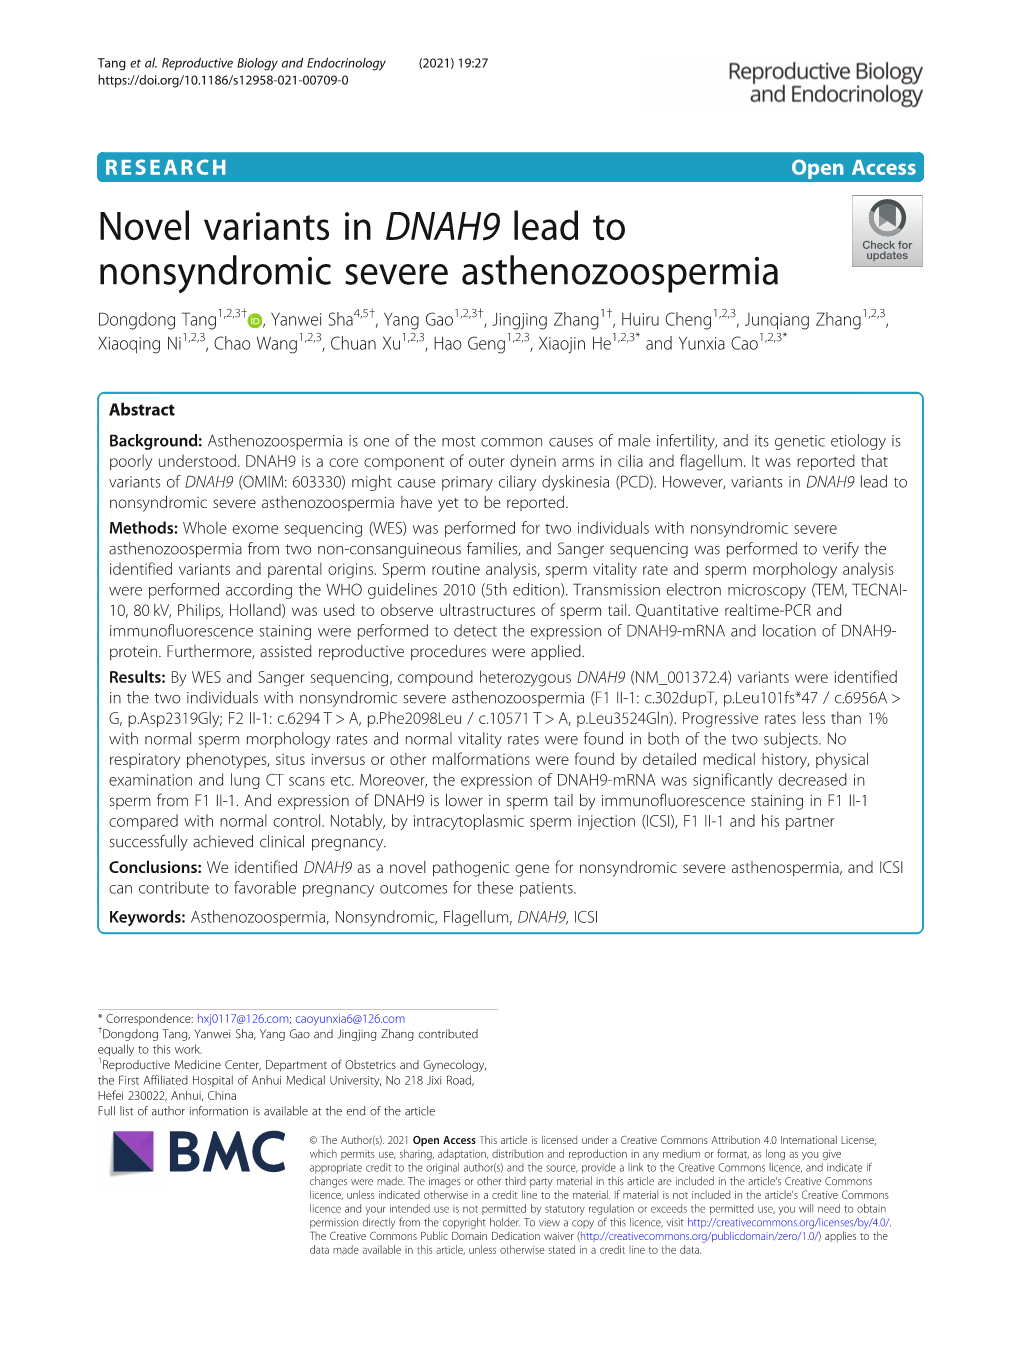 Novel Variants in DNAH9 Lead to Nonsyndromic Severe Asthenozoospermia